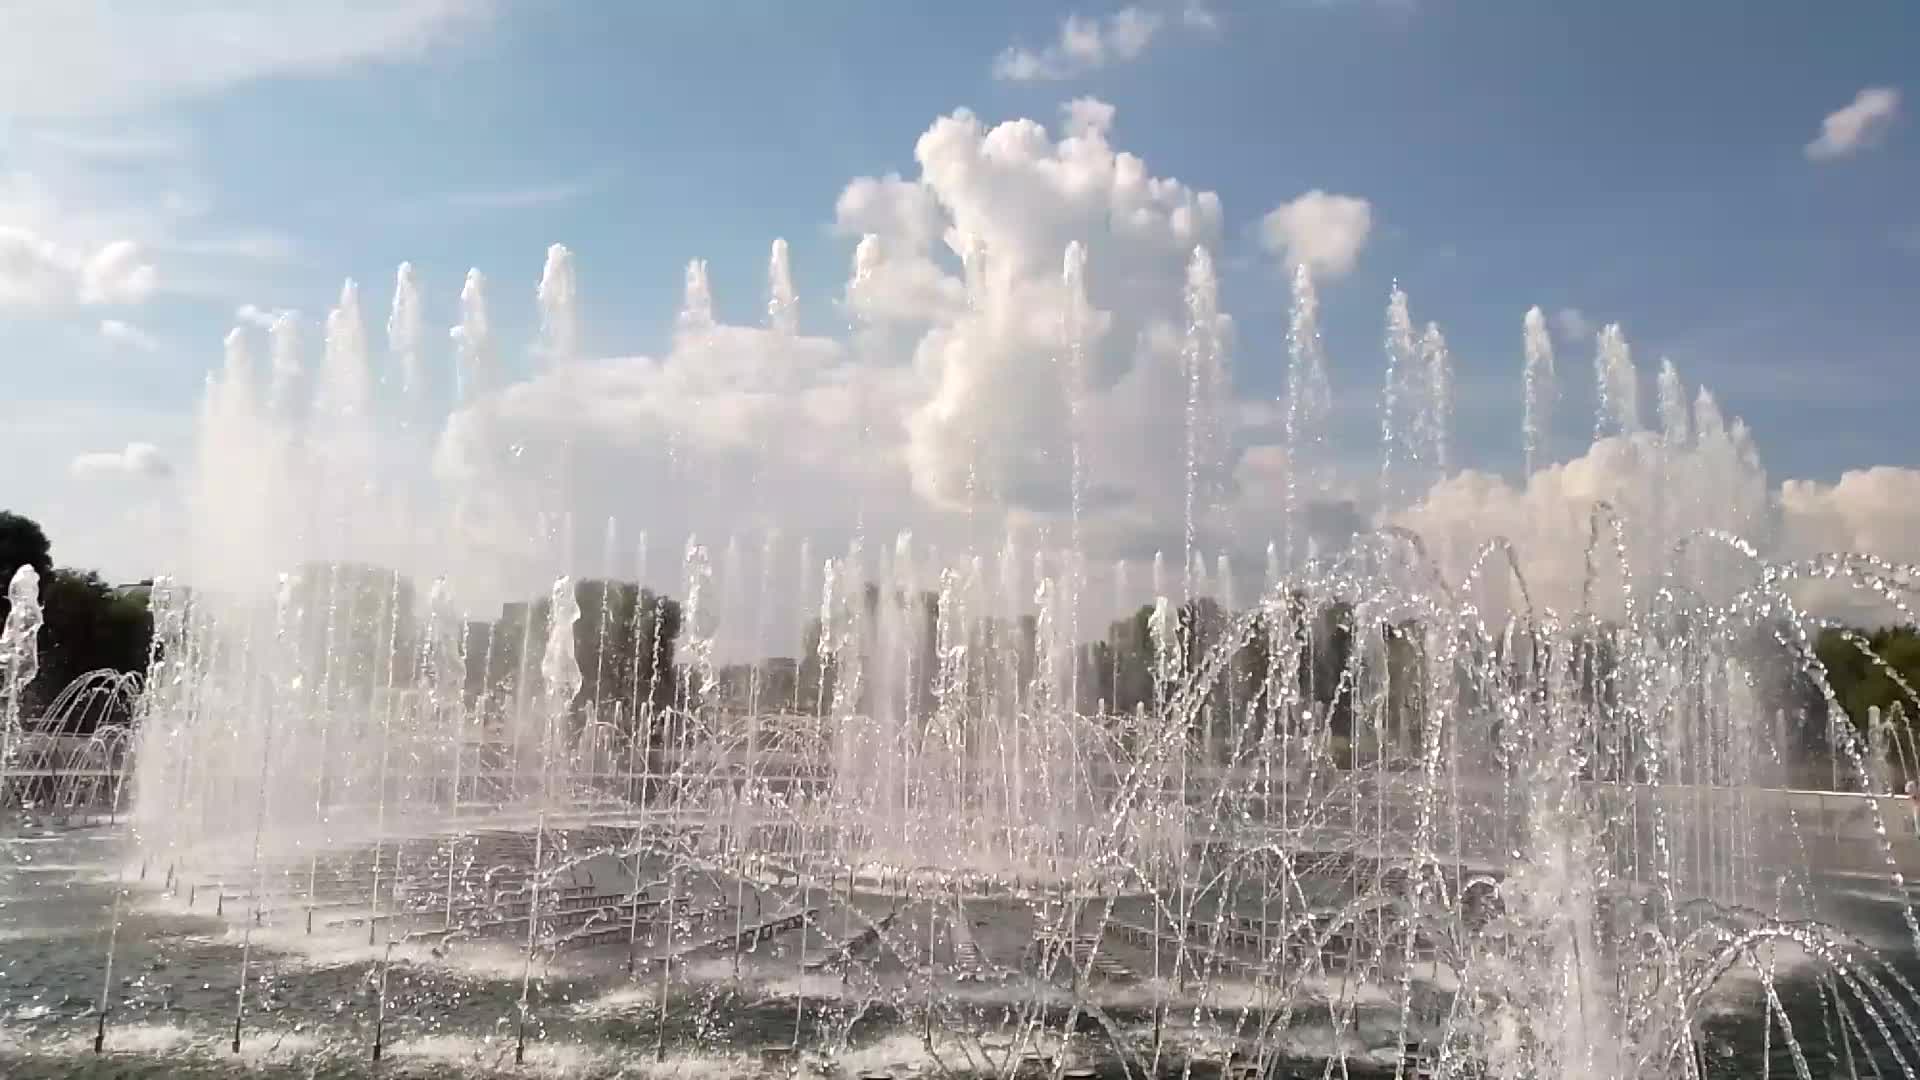 парк царицыно фонтан